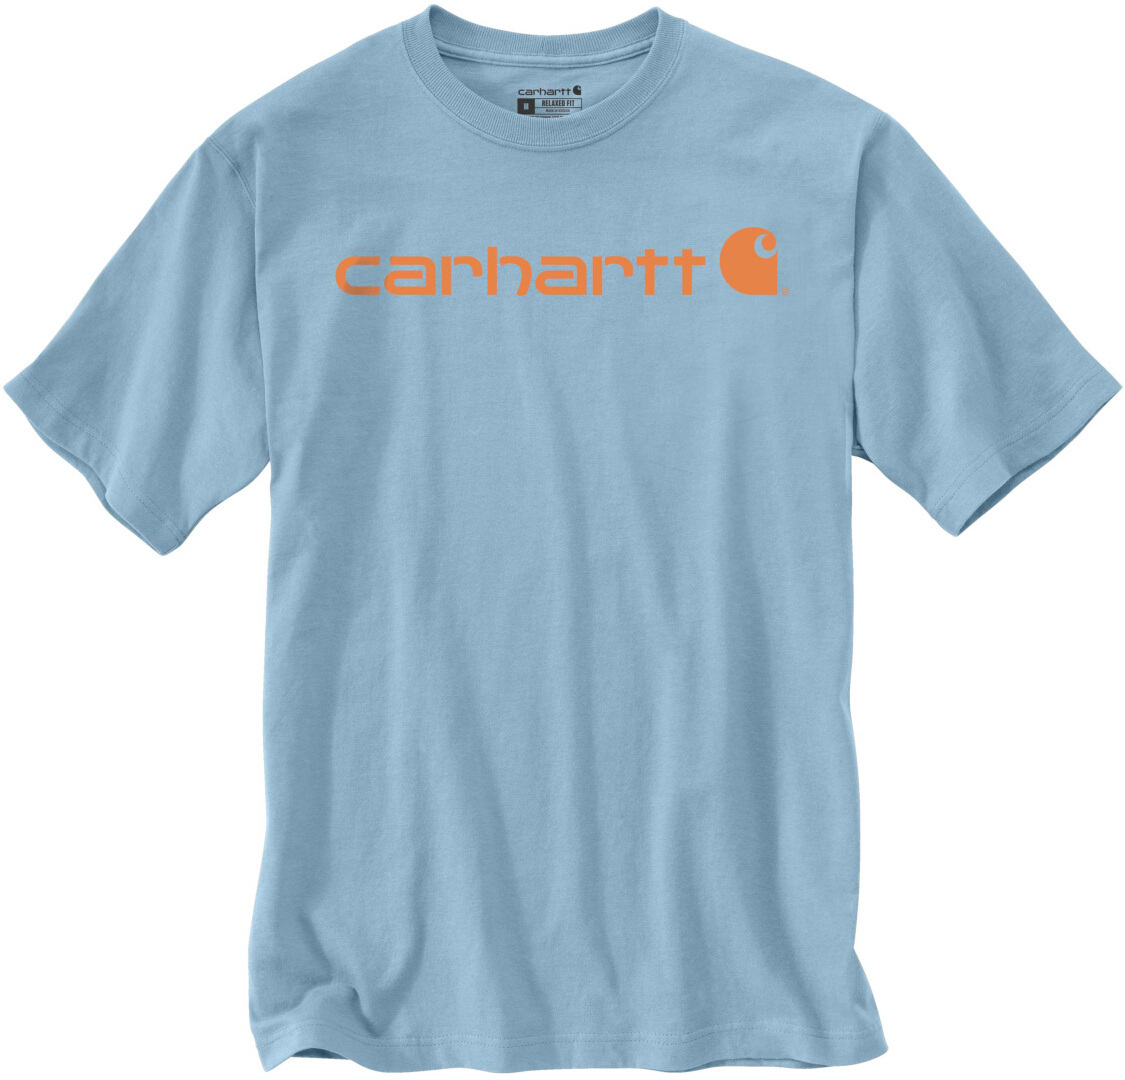 Image of Carhartt EMEA Core Logo Workwear Short Sleeve Maglietta, blu-arancione, dimensione M